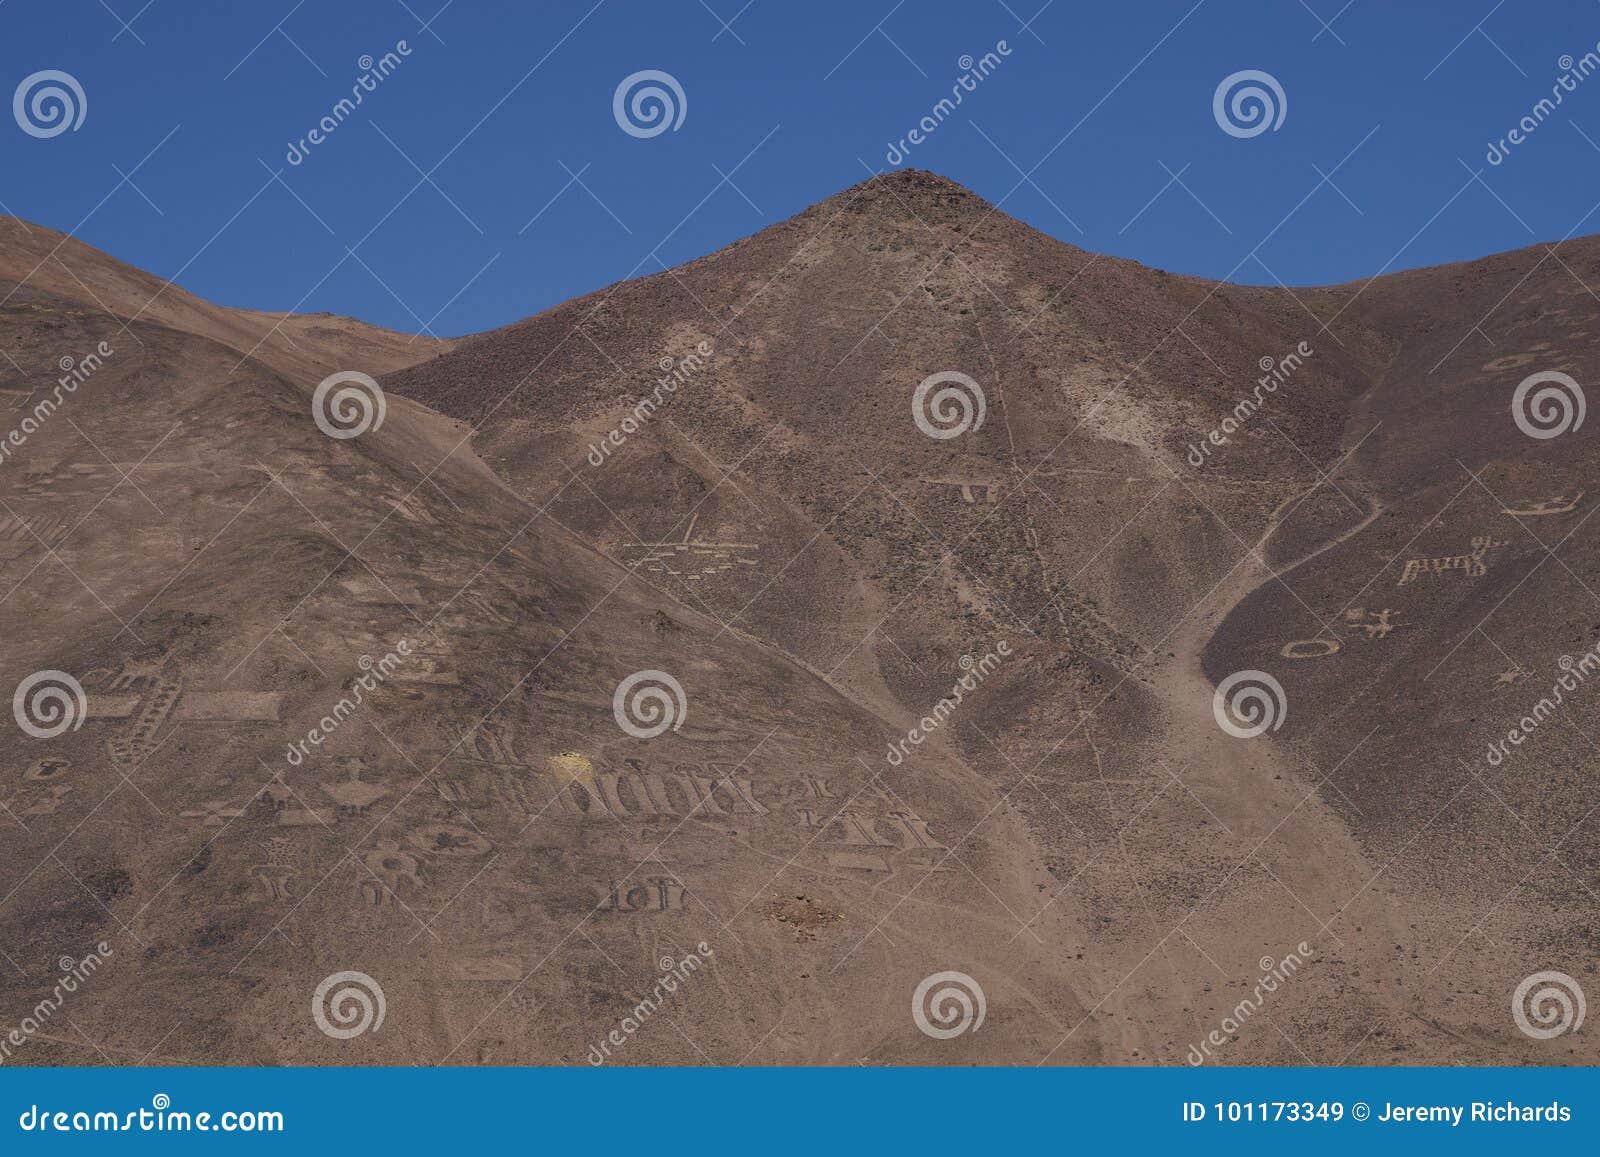 petroglyphs at cerro pintados, atacama desert, chile